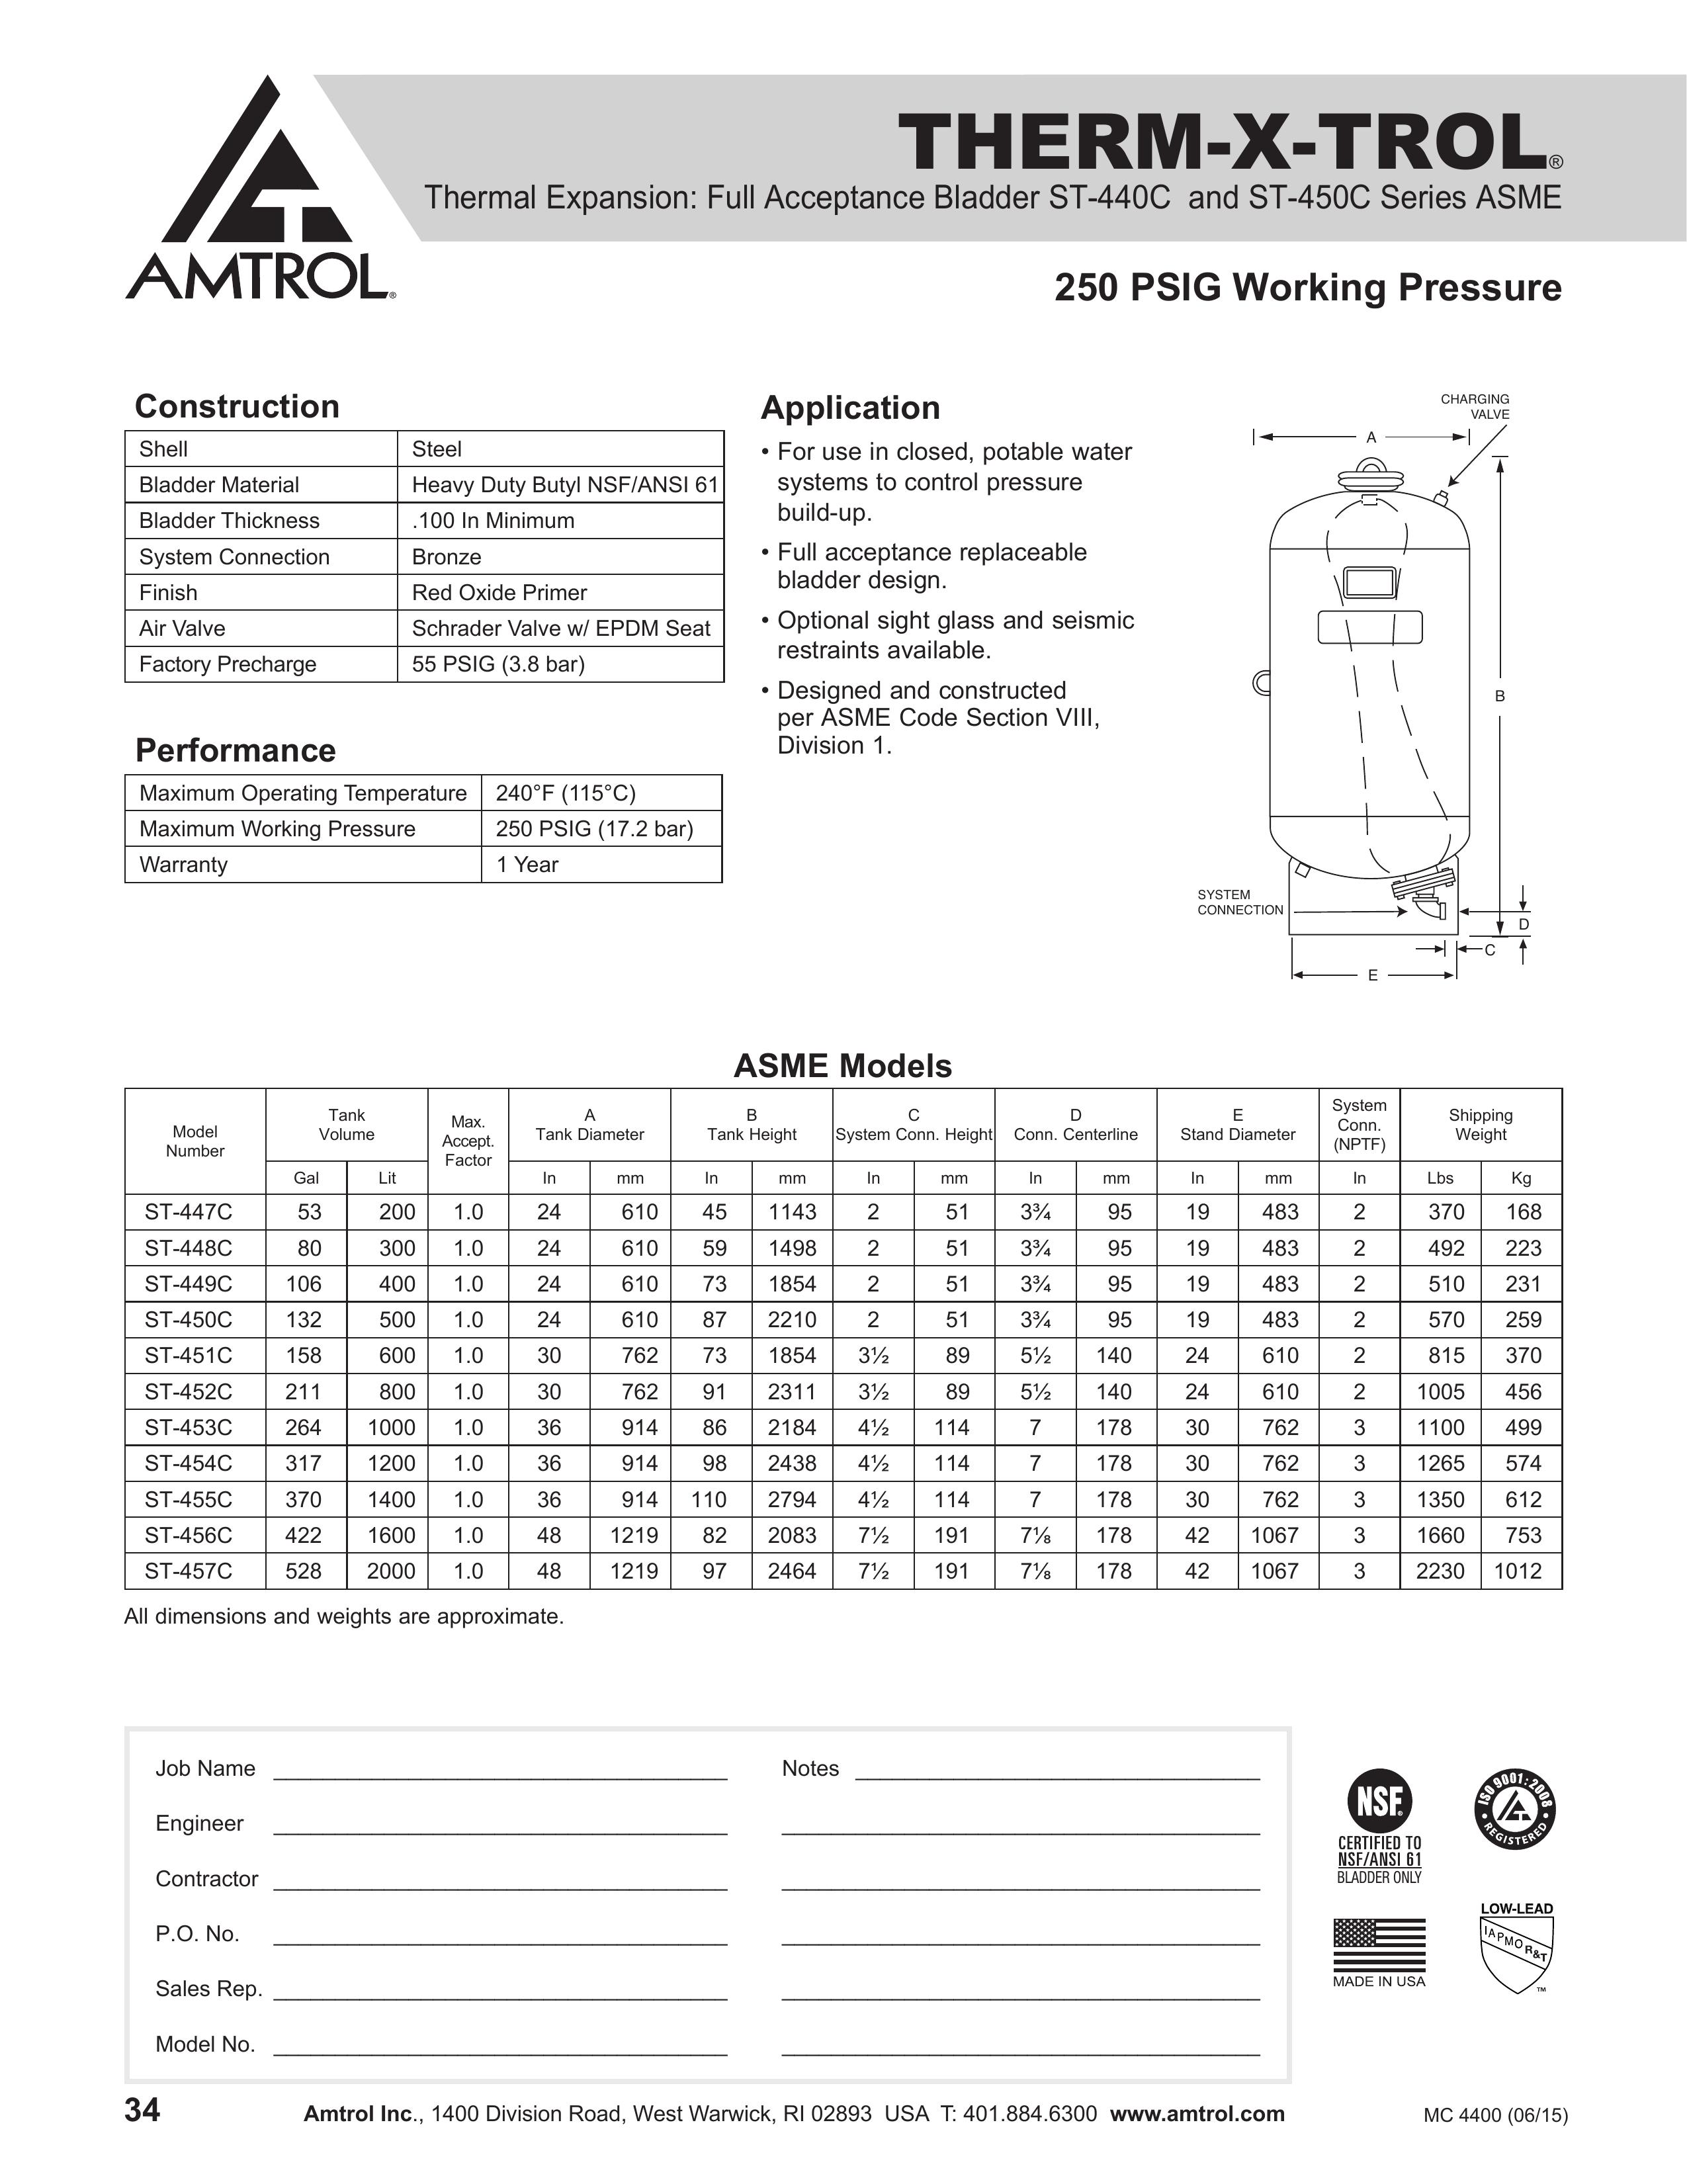 Amtrol ST-453C Slow Cooker User Manual